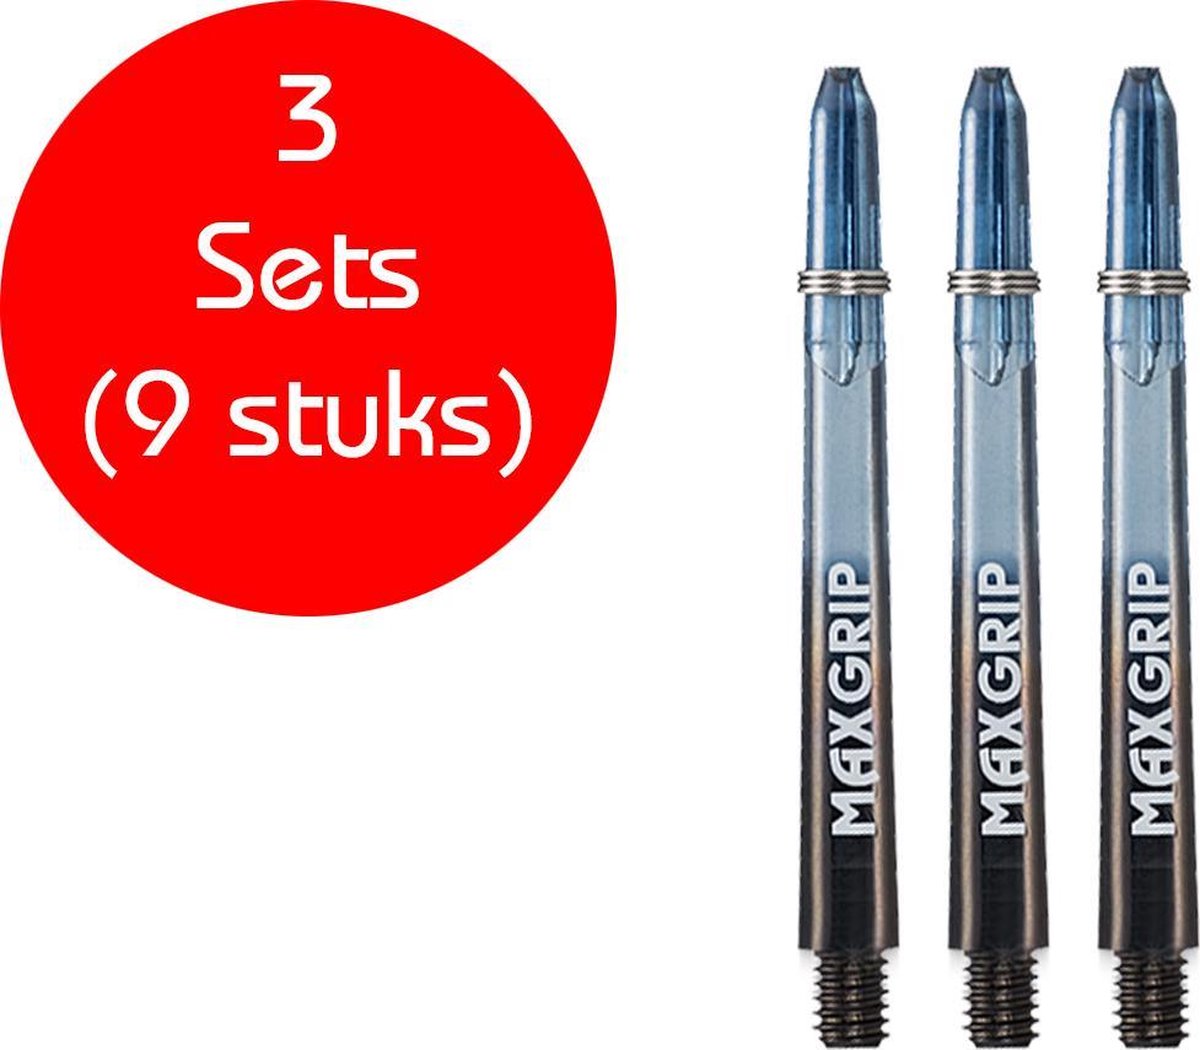 Dragon darts - Maxgrip - 3 sets (9stuks) - dart shafts - zwart-blauw - darts shafts - medium